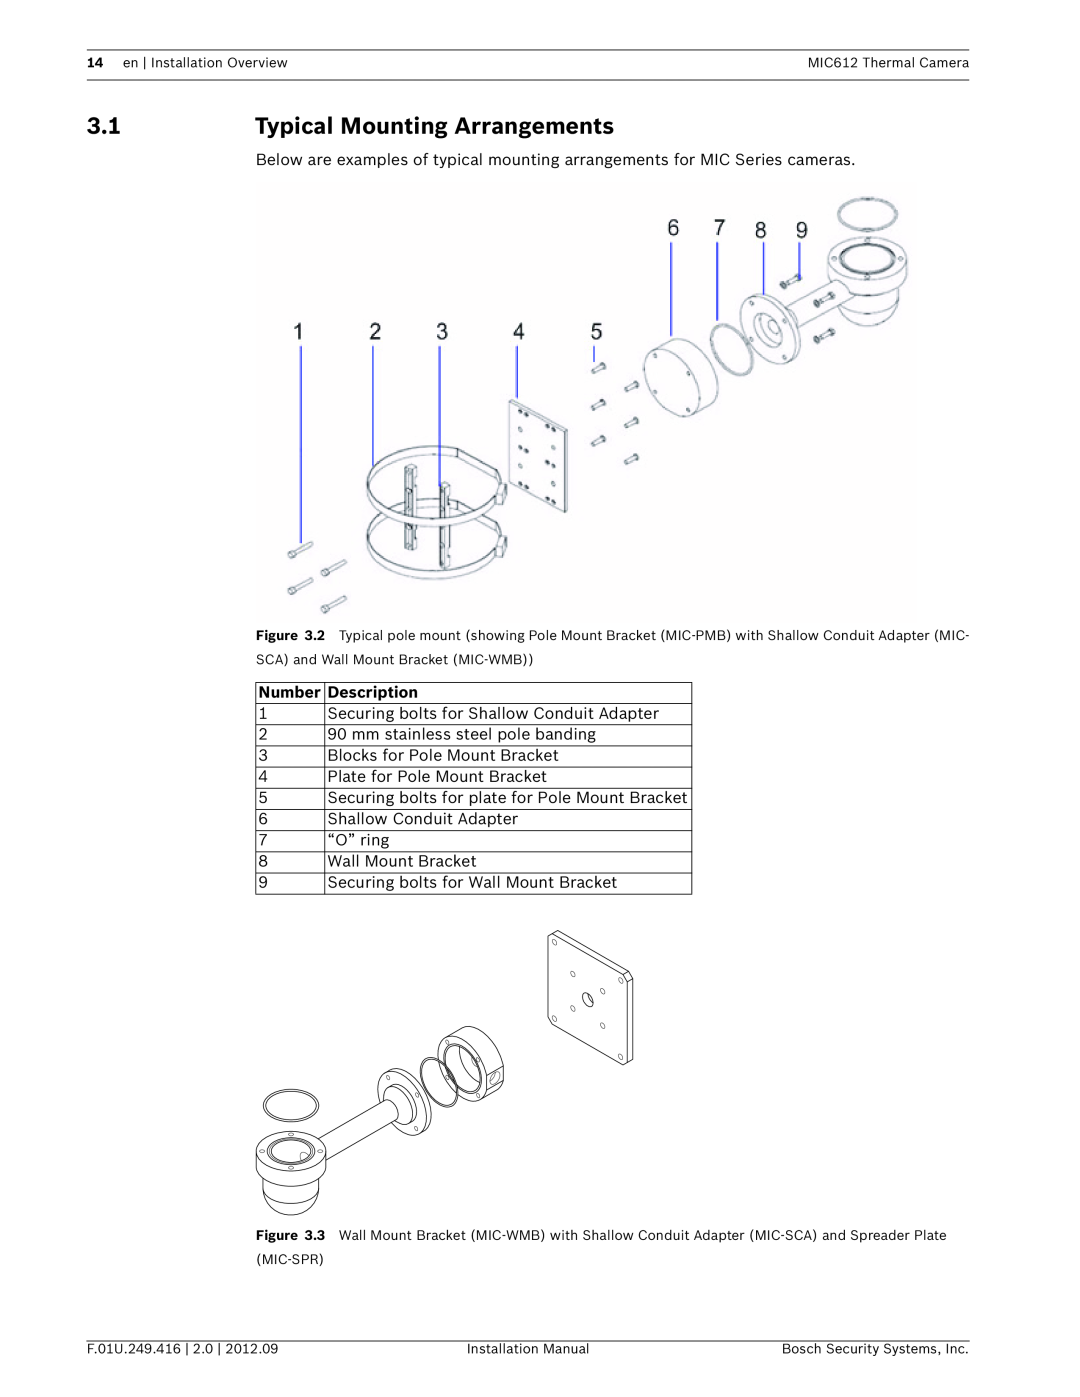 Bosch Appliances MIC612 installation manual Typical Mounting Arrangements, Number, Description 